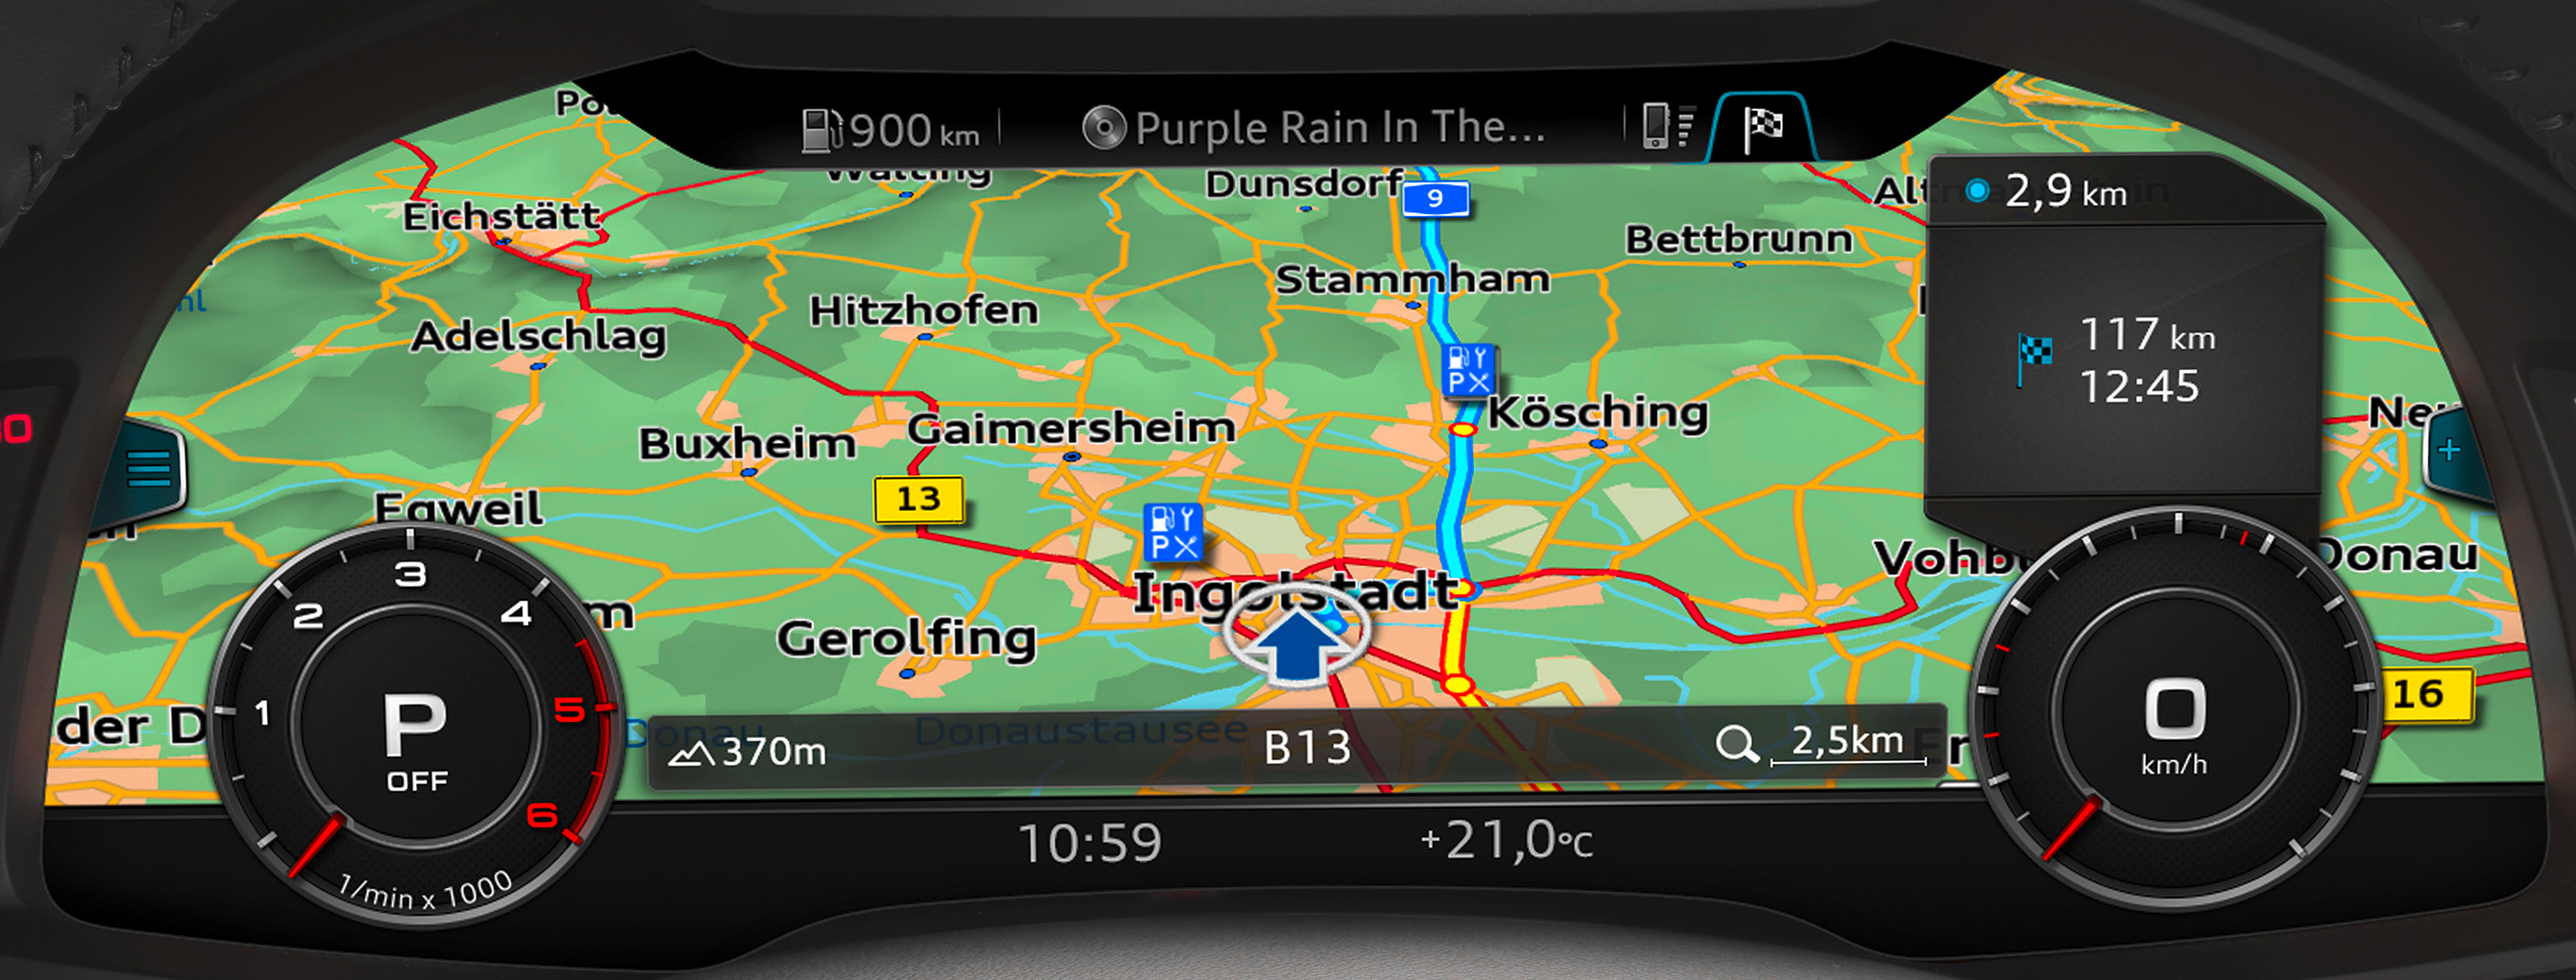 Audi Utilizes HighResolution Navigation Maps for its Driver Assistance